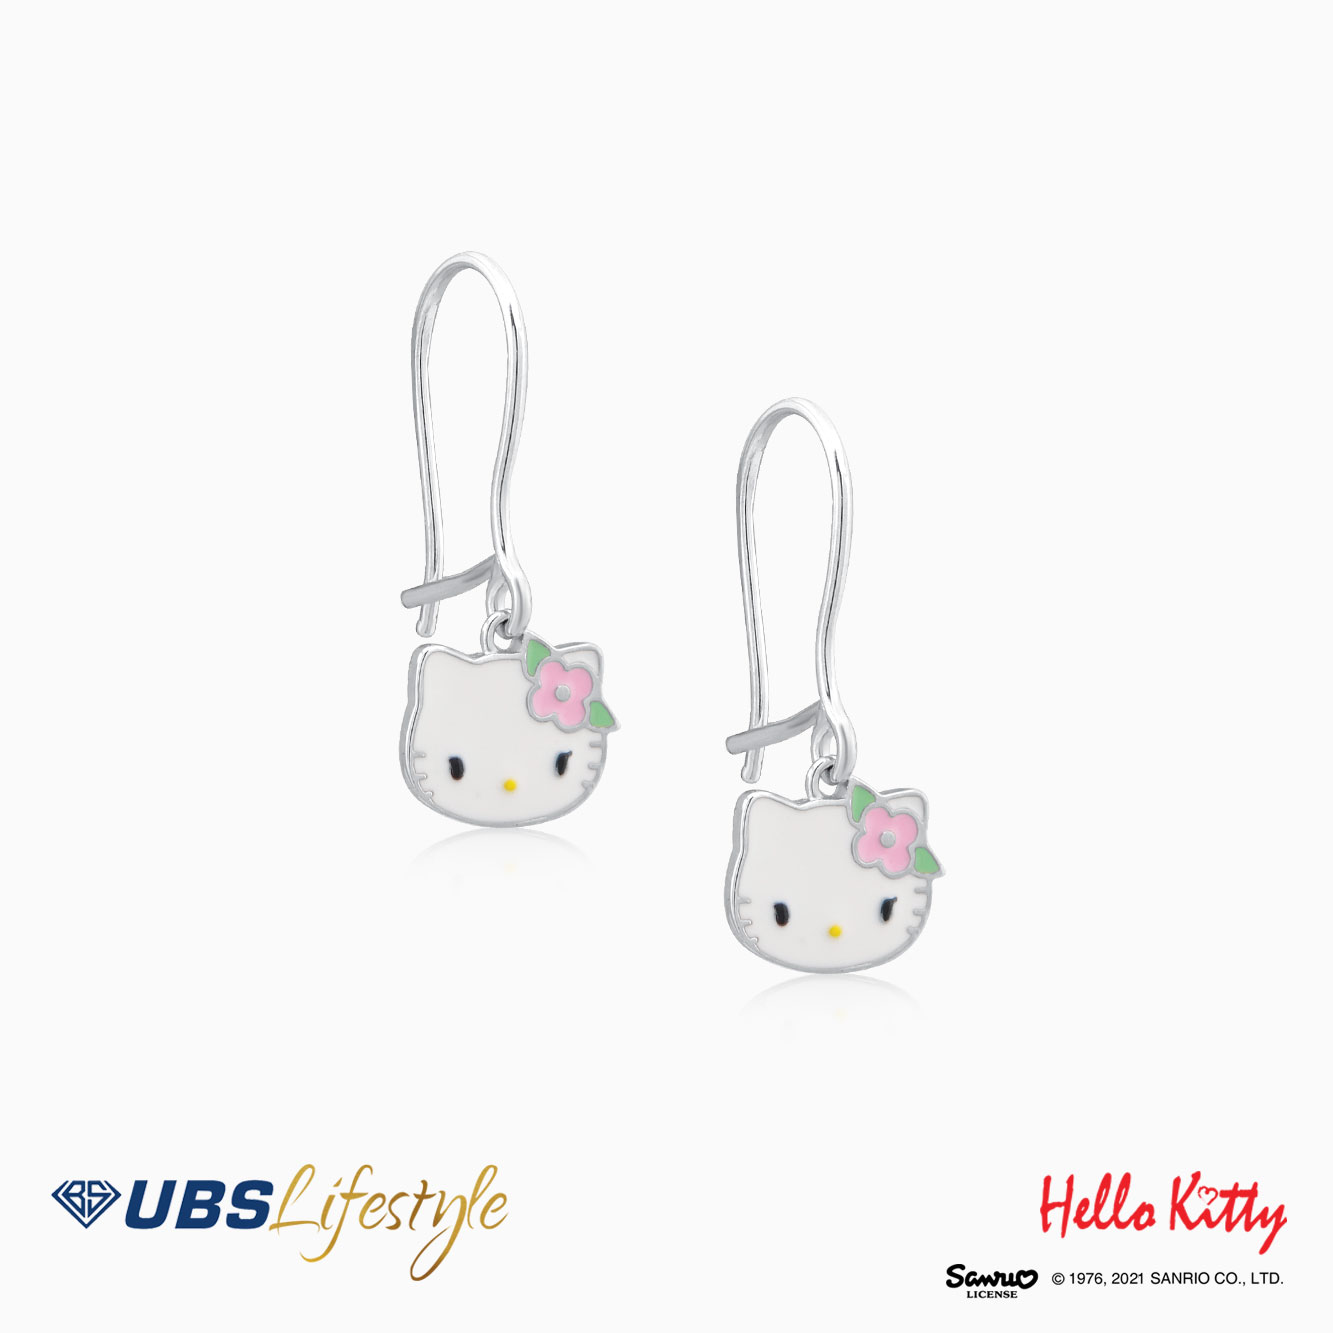 UBS Gold Anting Emas Anak Sanrio Hello Kitty - Aaz0028 - 17K